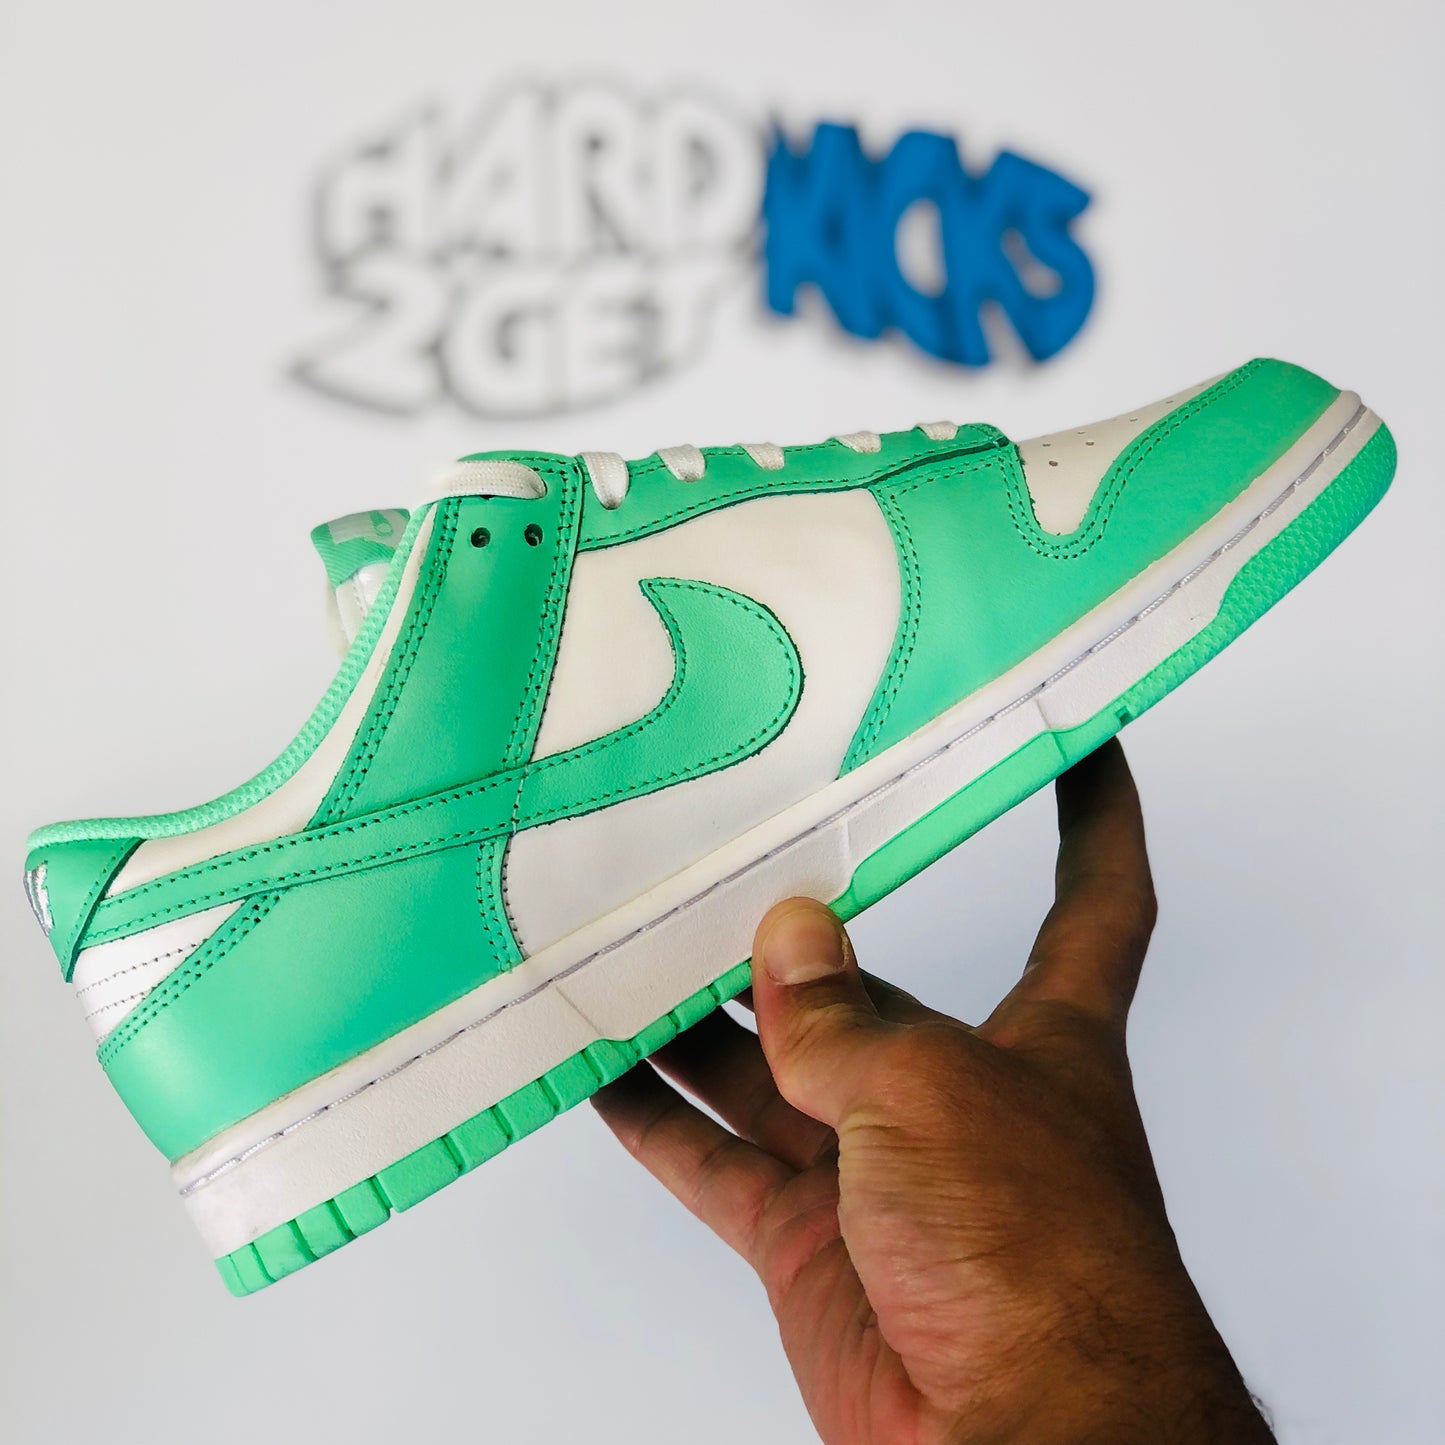 Wmns Nike Dunk Low - Green Glow